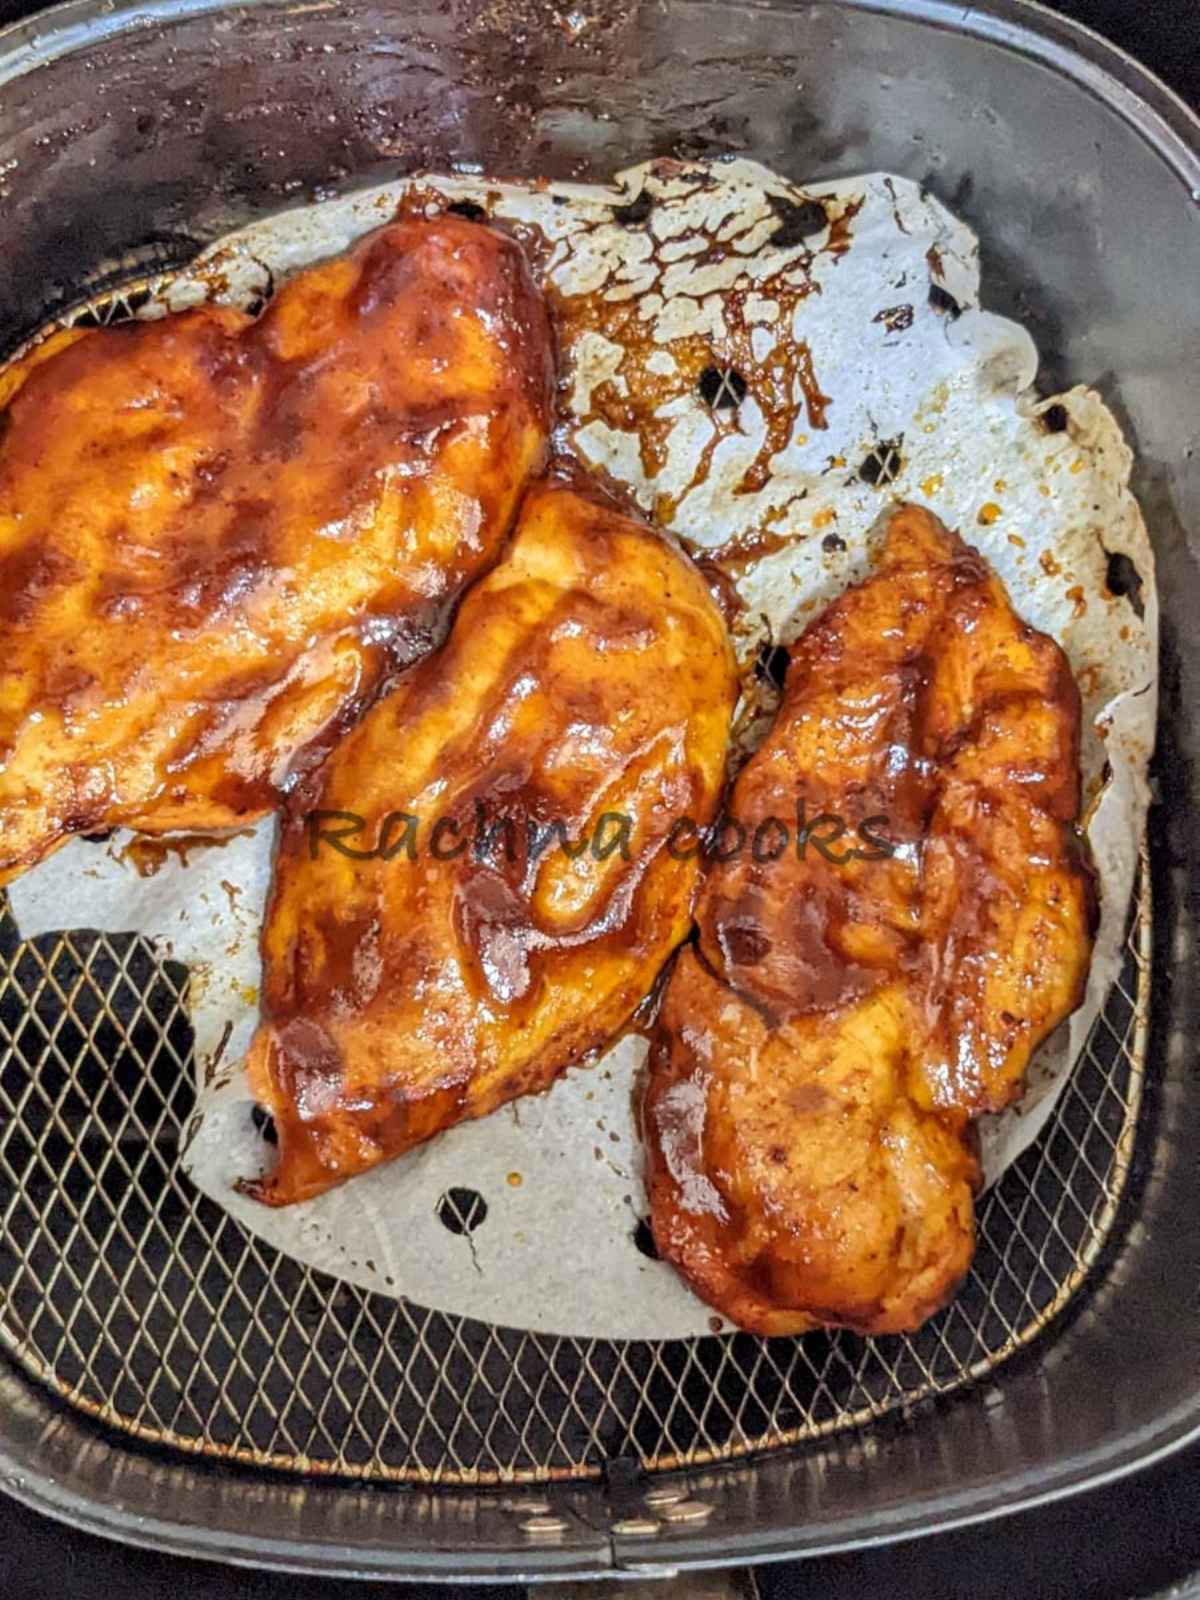 Chicken fillets with BBQ sauce in air fryer basket.